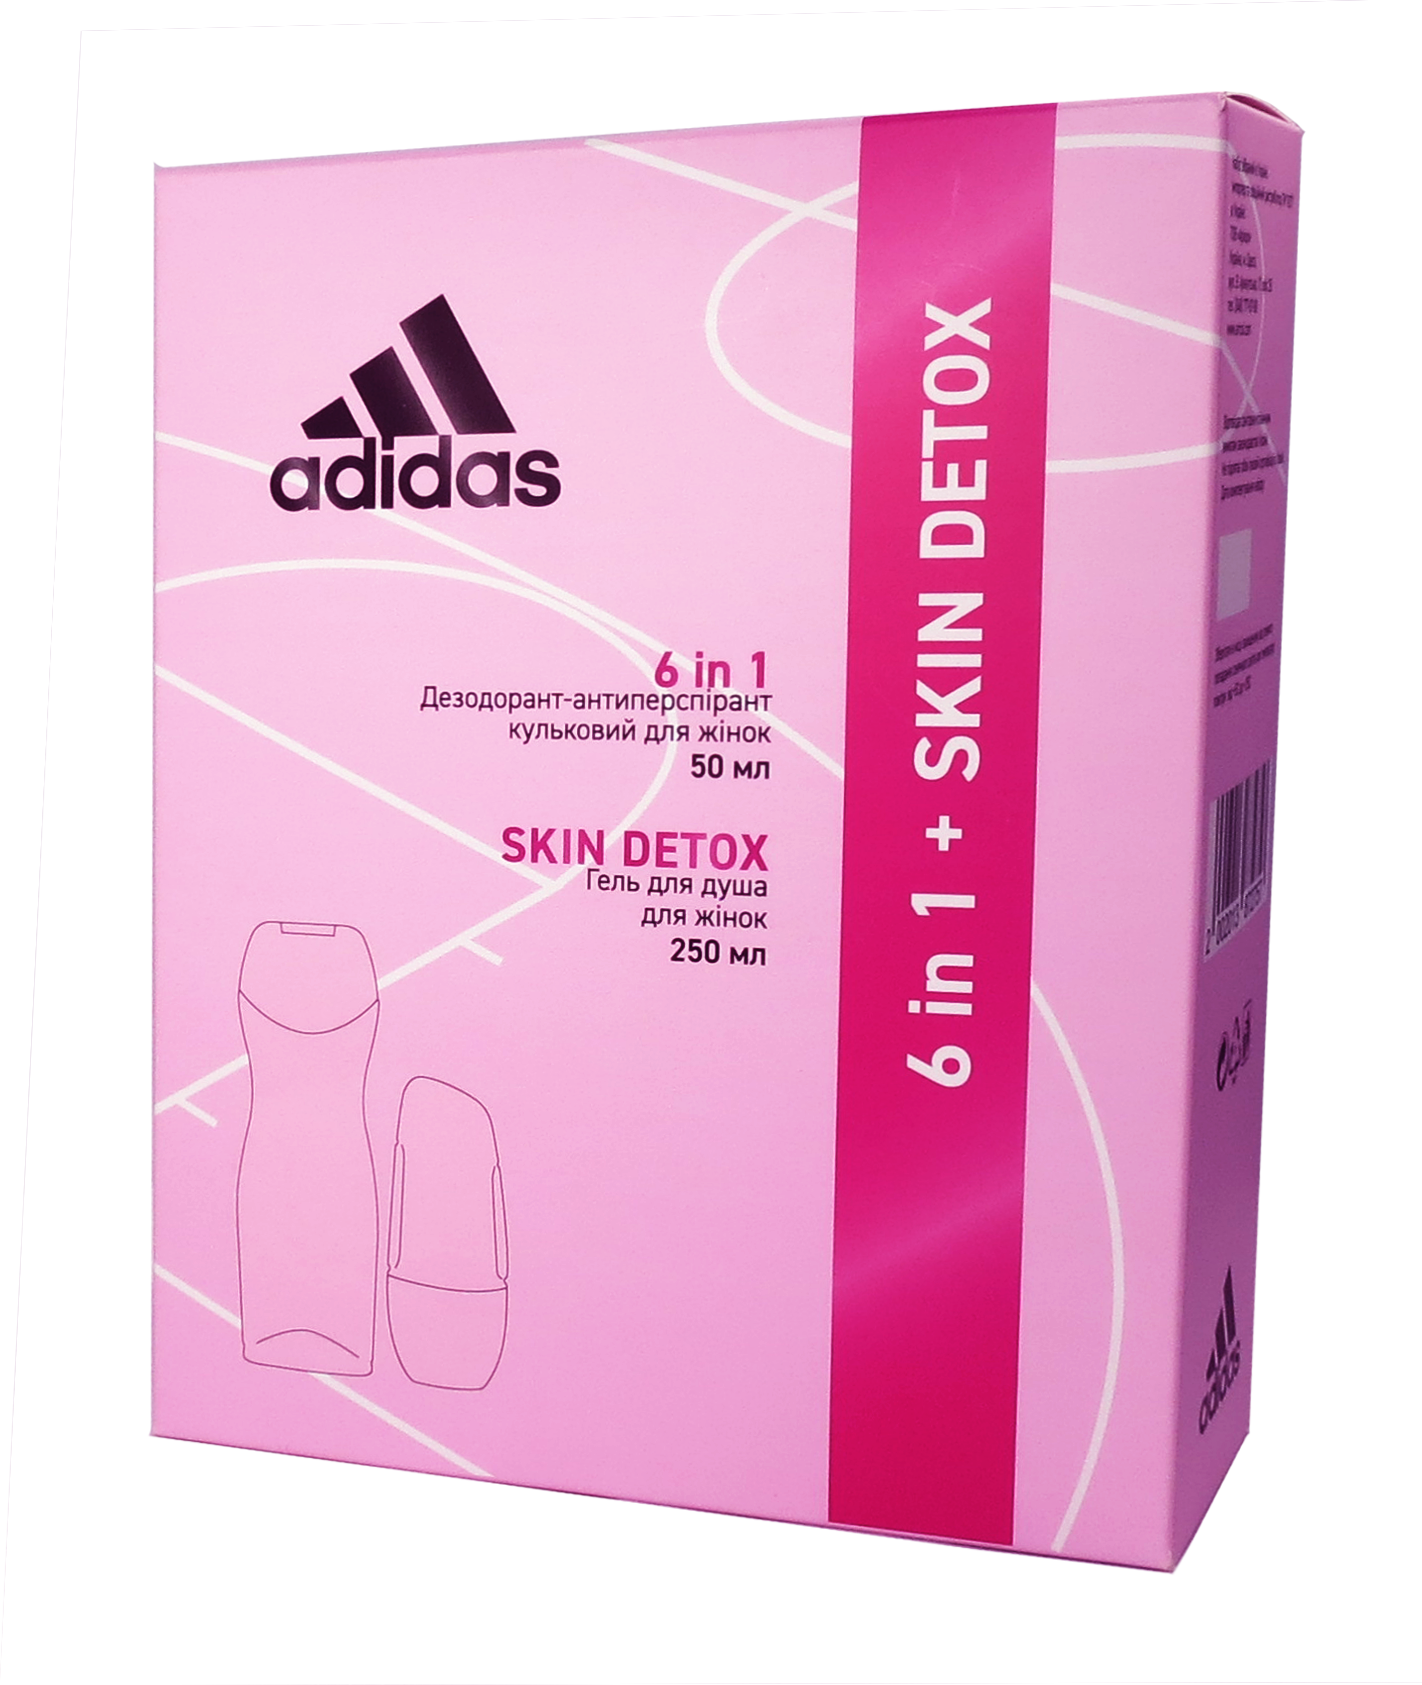 Набор для женщин Adidas 2020 Дезодорант-антиперспирант 6 в 1, 50 мл + Гель для душа Skin Detox, 250 мл - фото 2